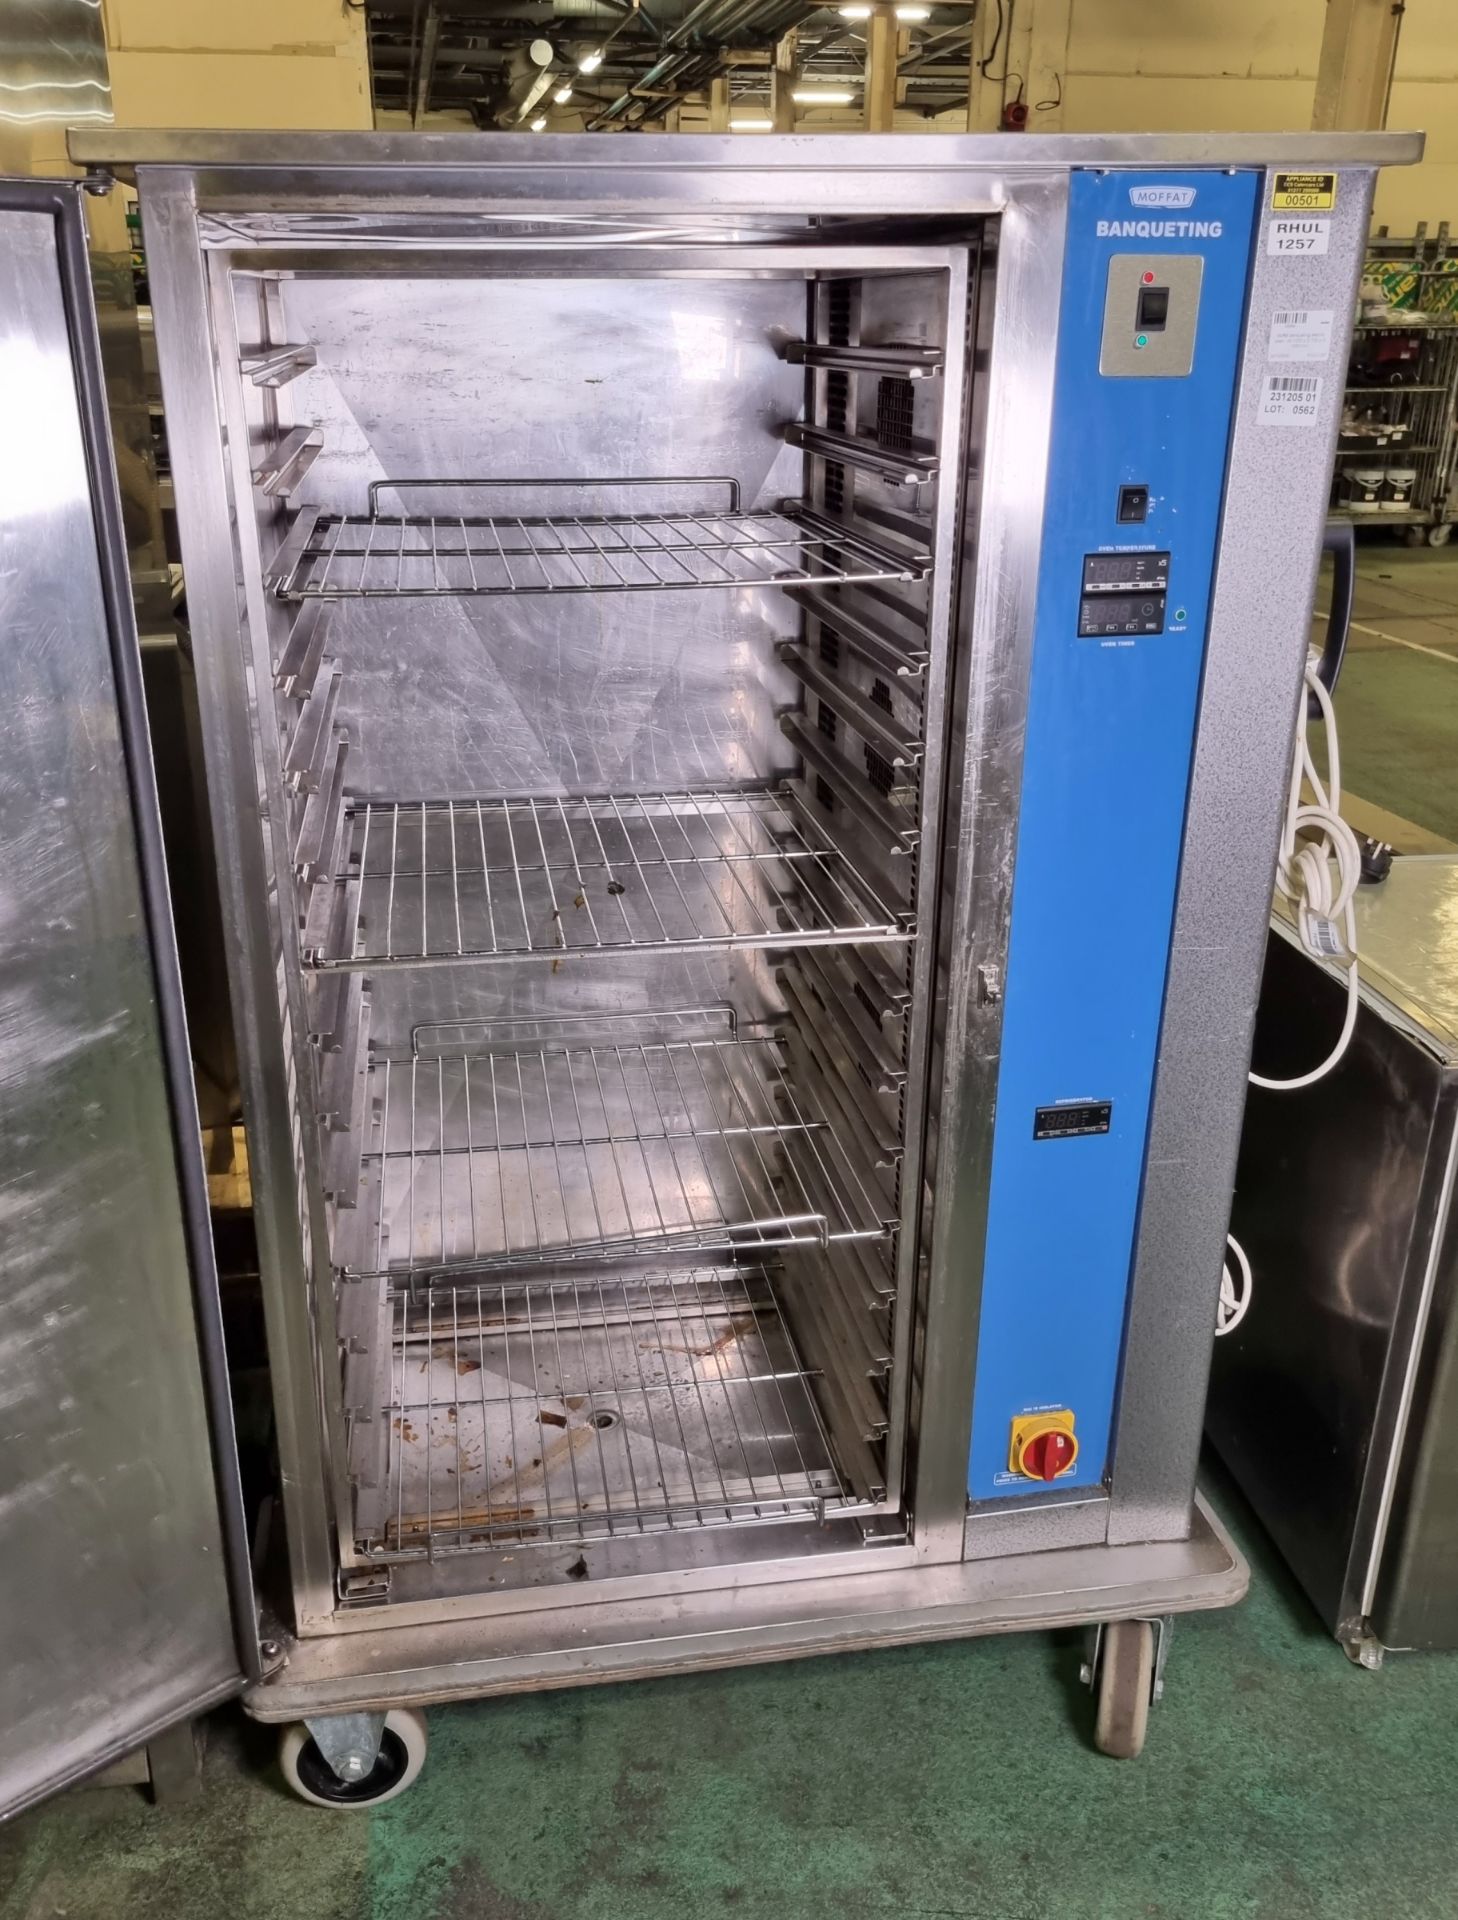 Moffat banqueting electric oven - W 1000 x D 700 x H 1580mm - Bild 3 aus 5